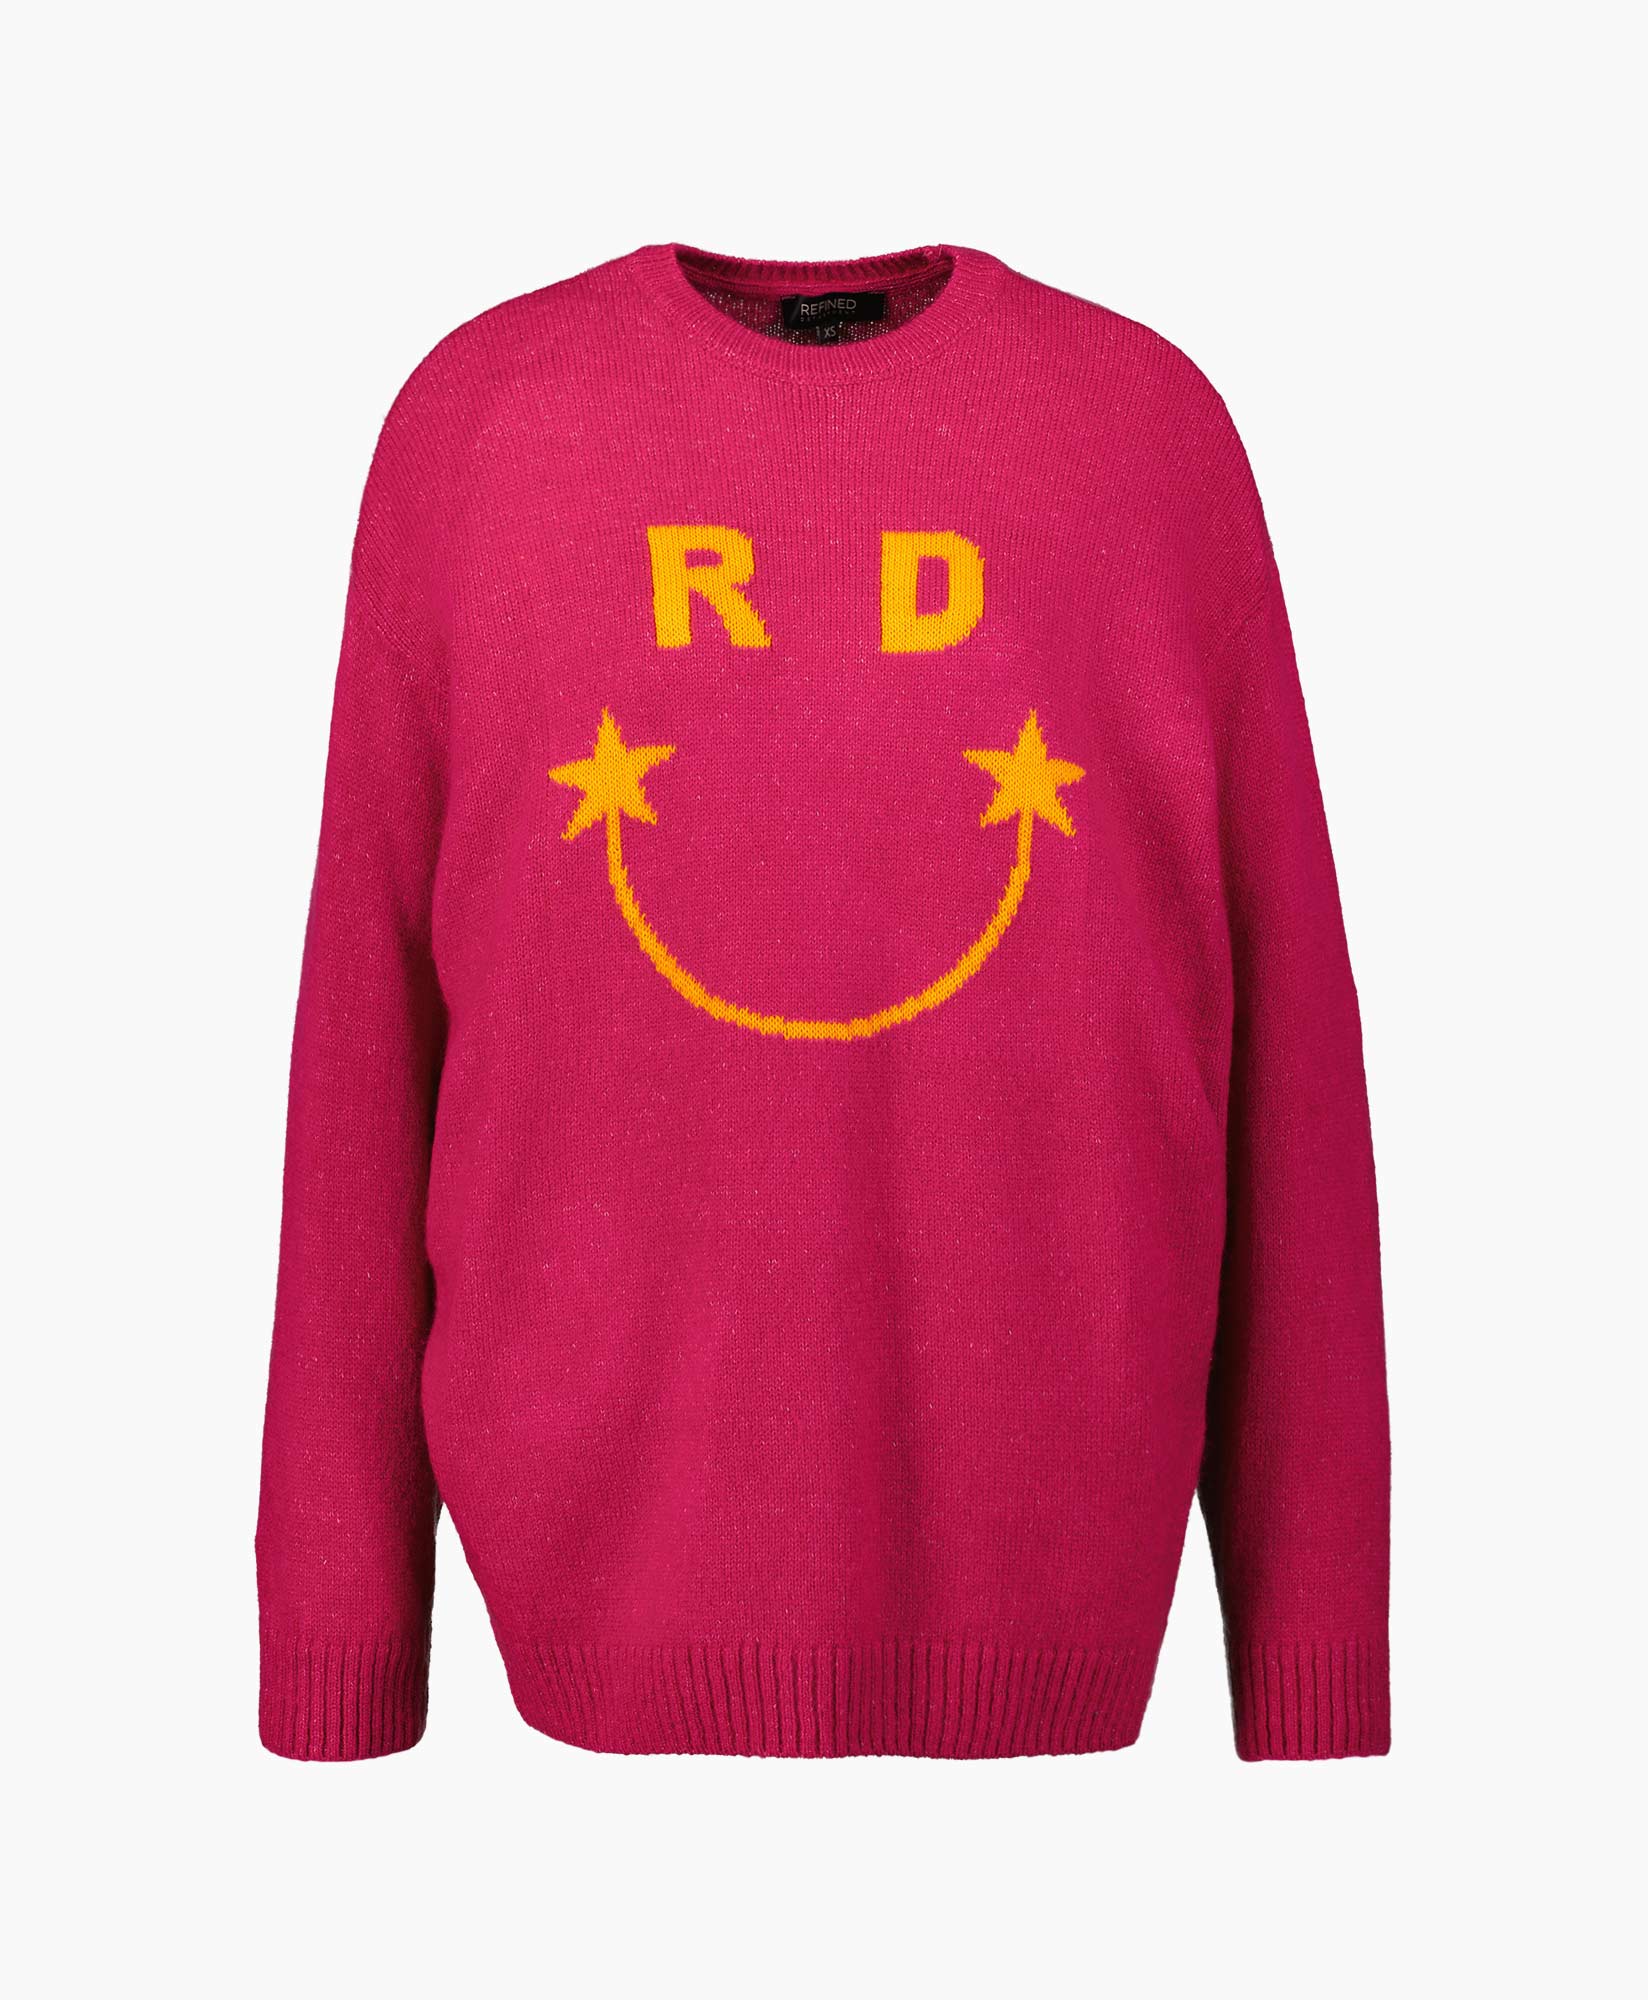 Refined Department Sweater Fayen Pink